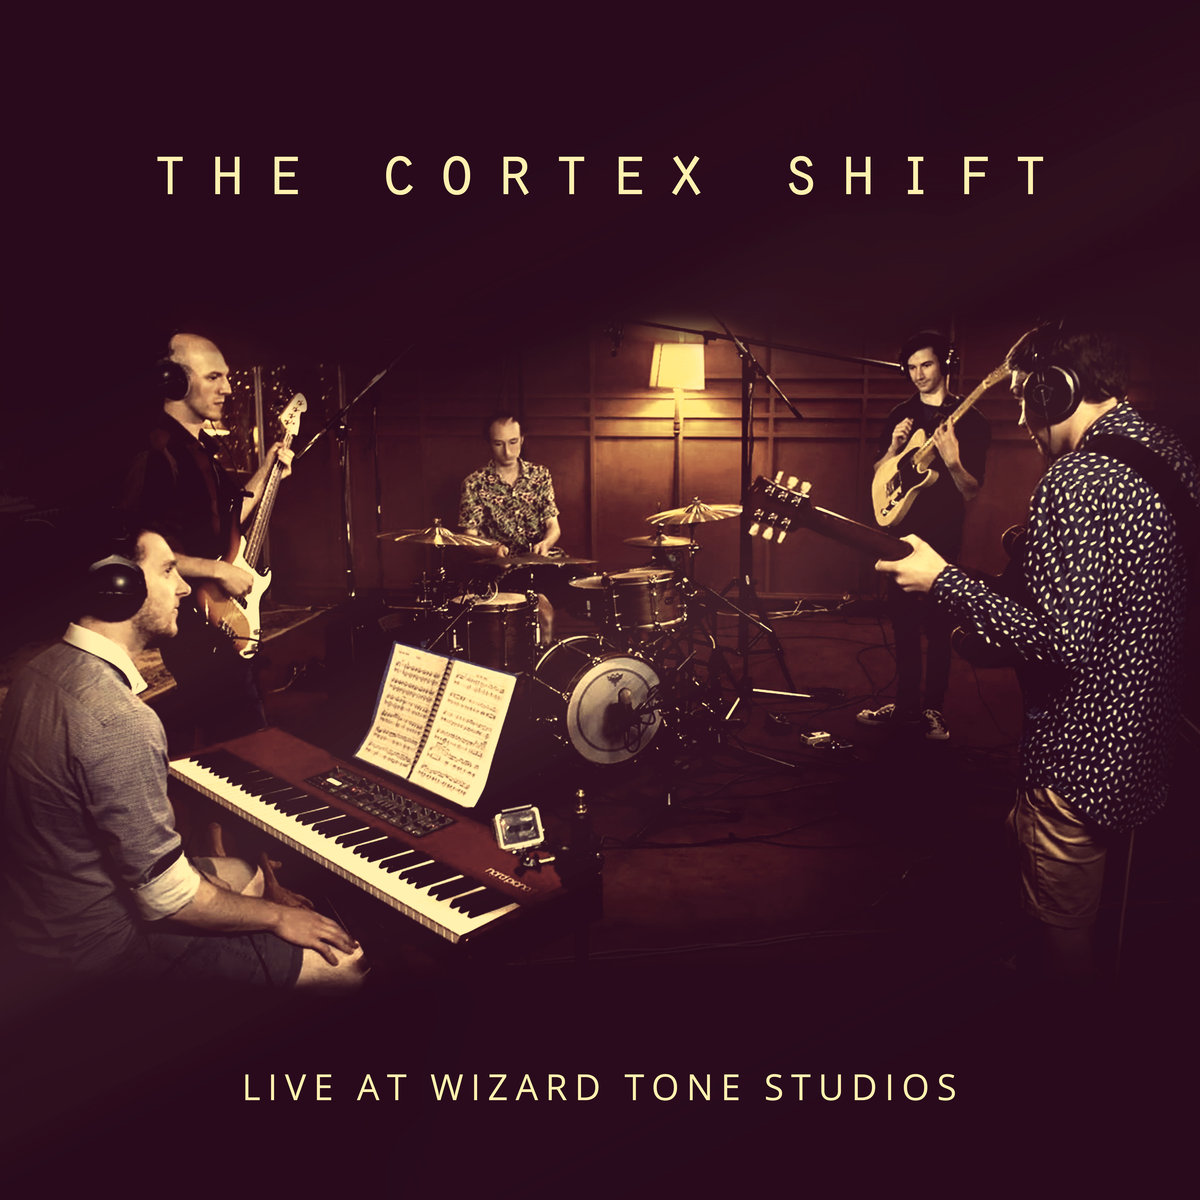 The Cortex Shift - "Live at Wizard Tone Studios" [Recorded & Mixed (JB), Mastered (JP)]